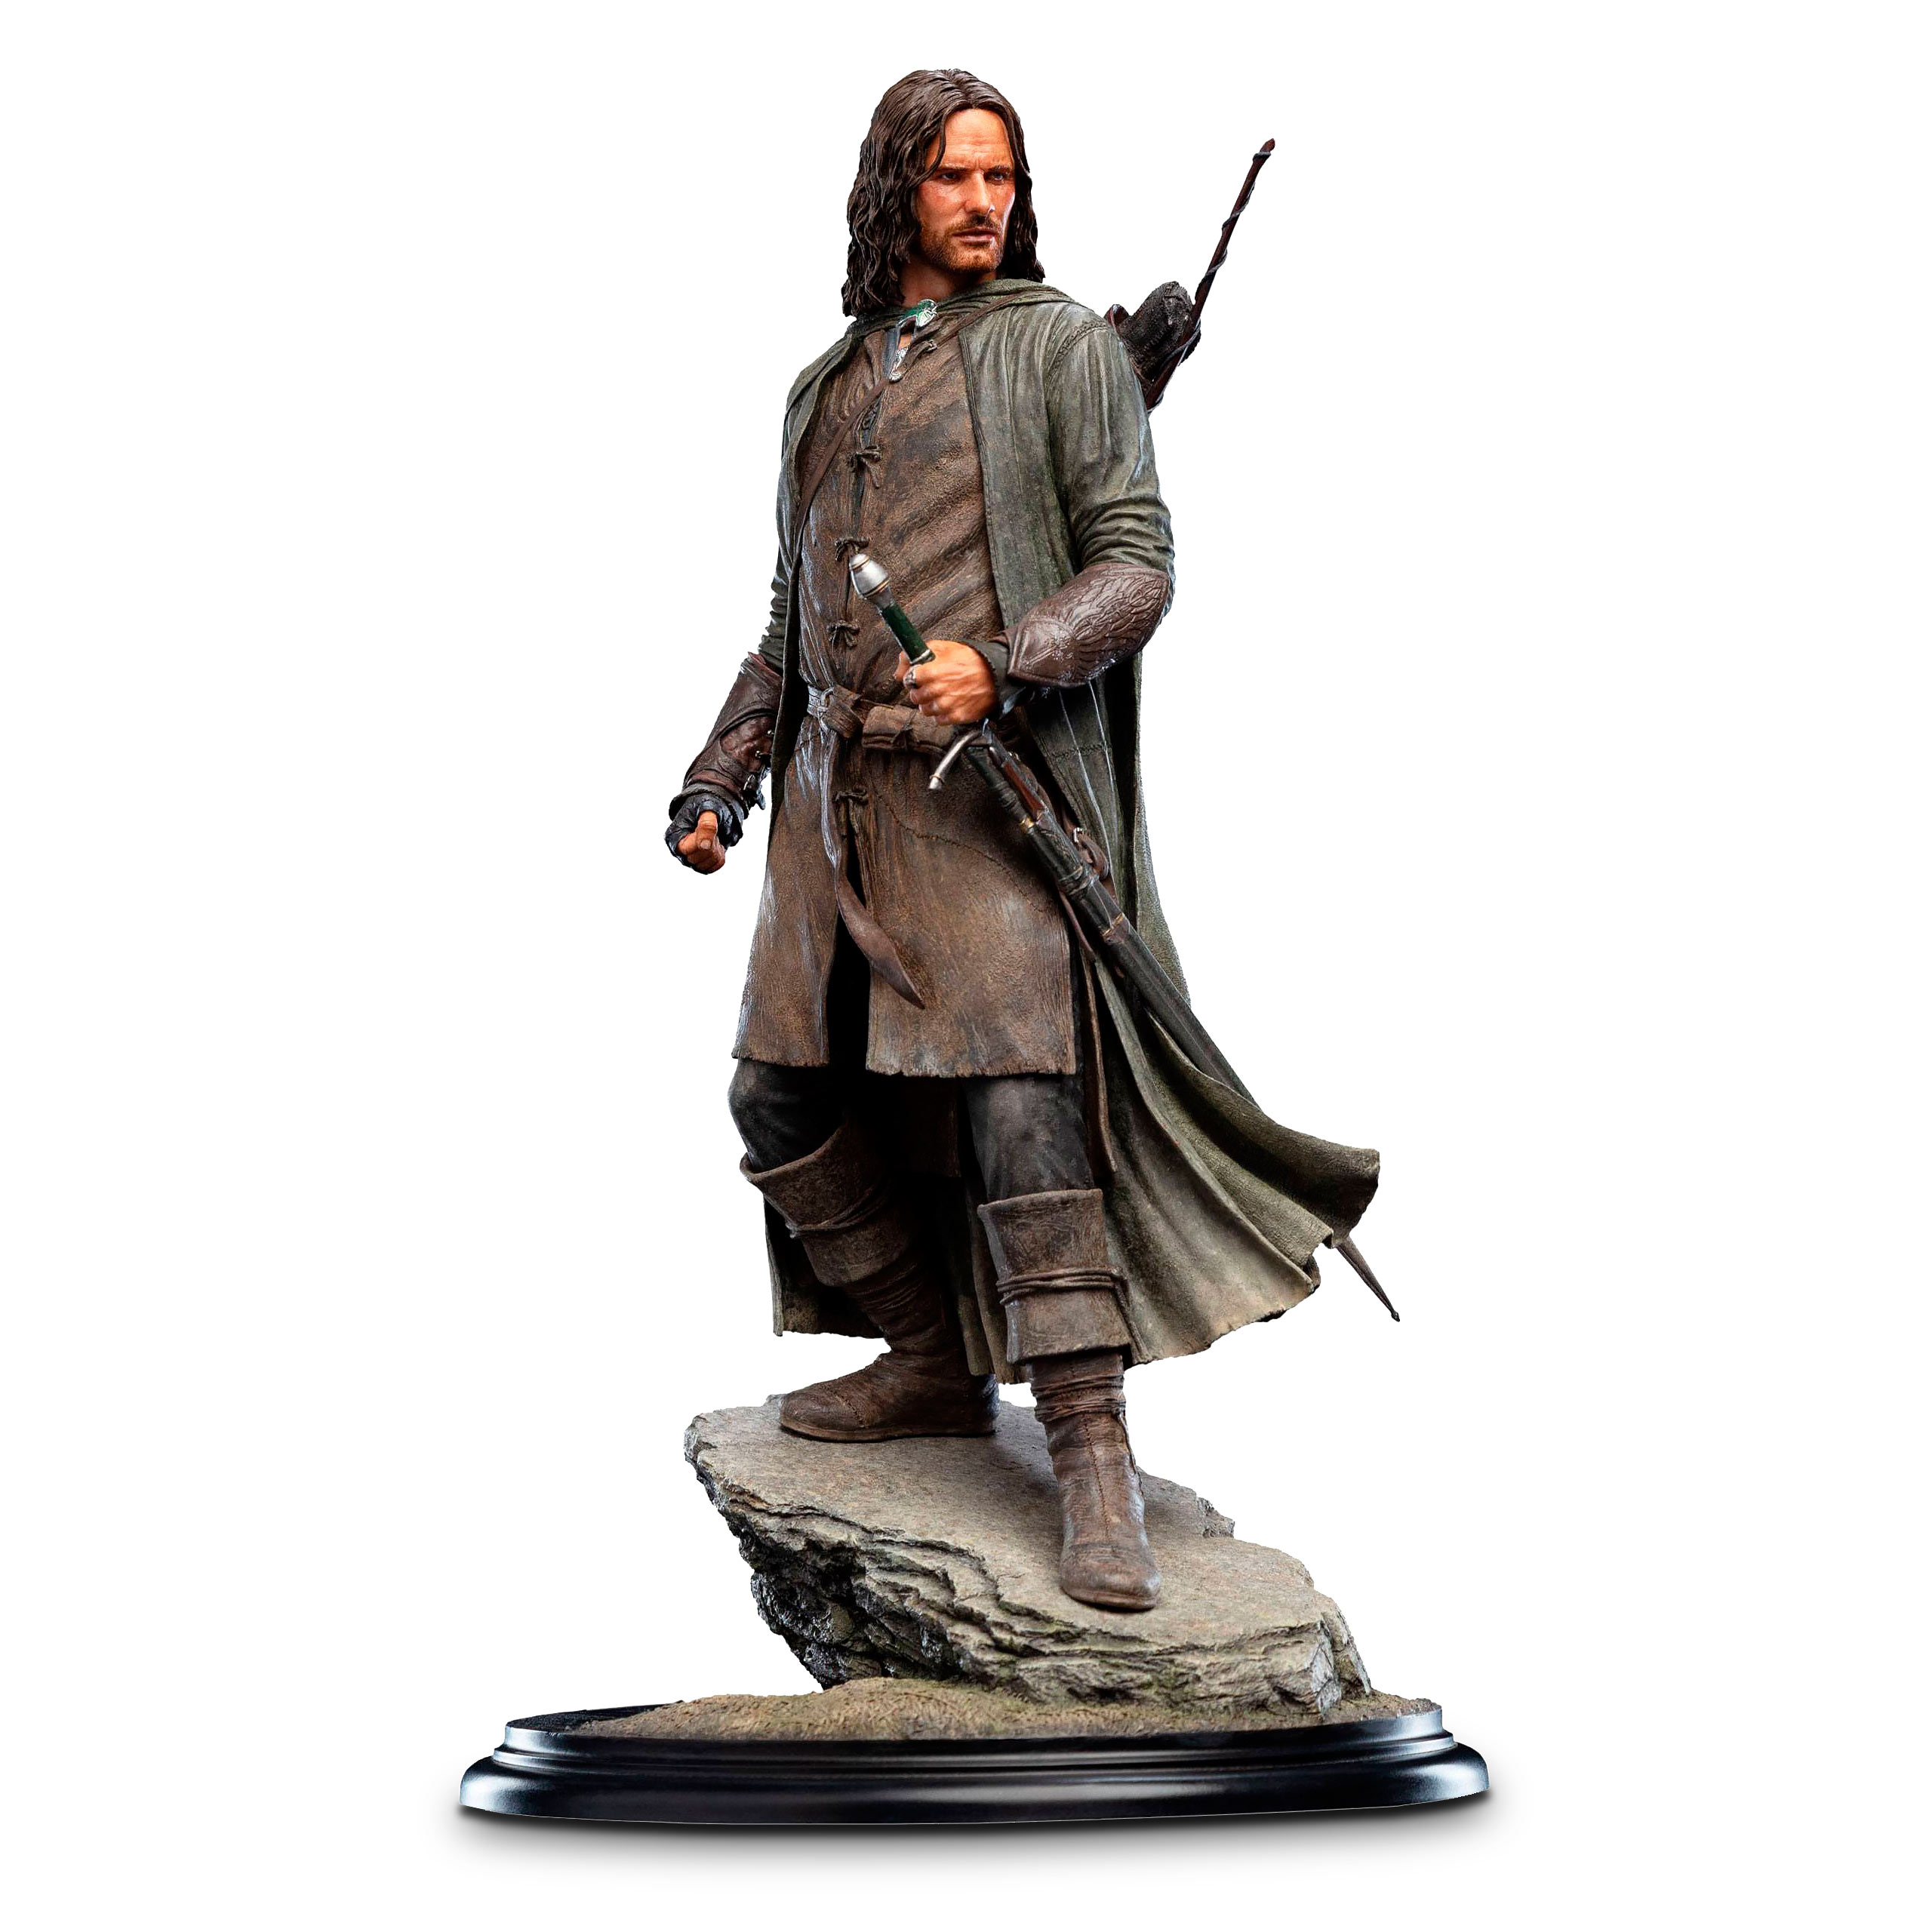 Herr der Ringe - Aragorn Statue